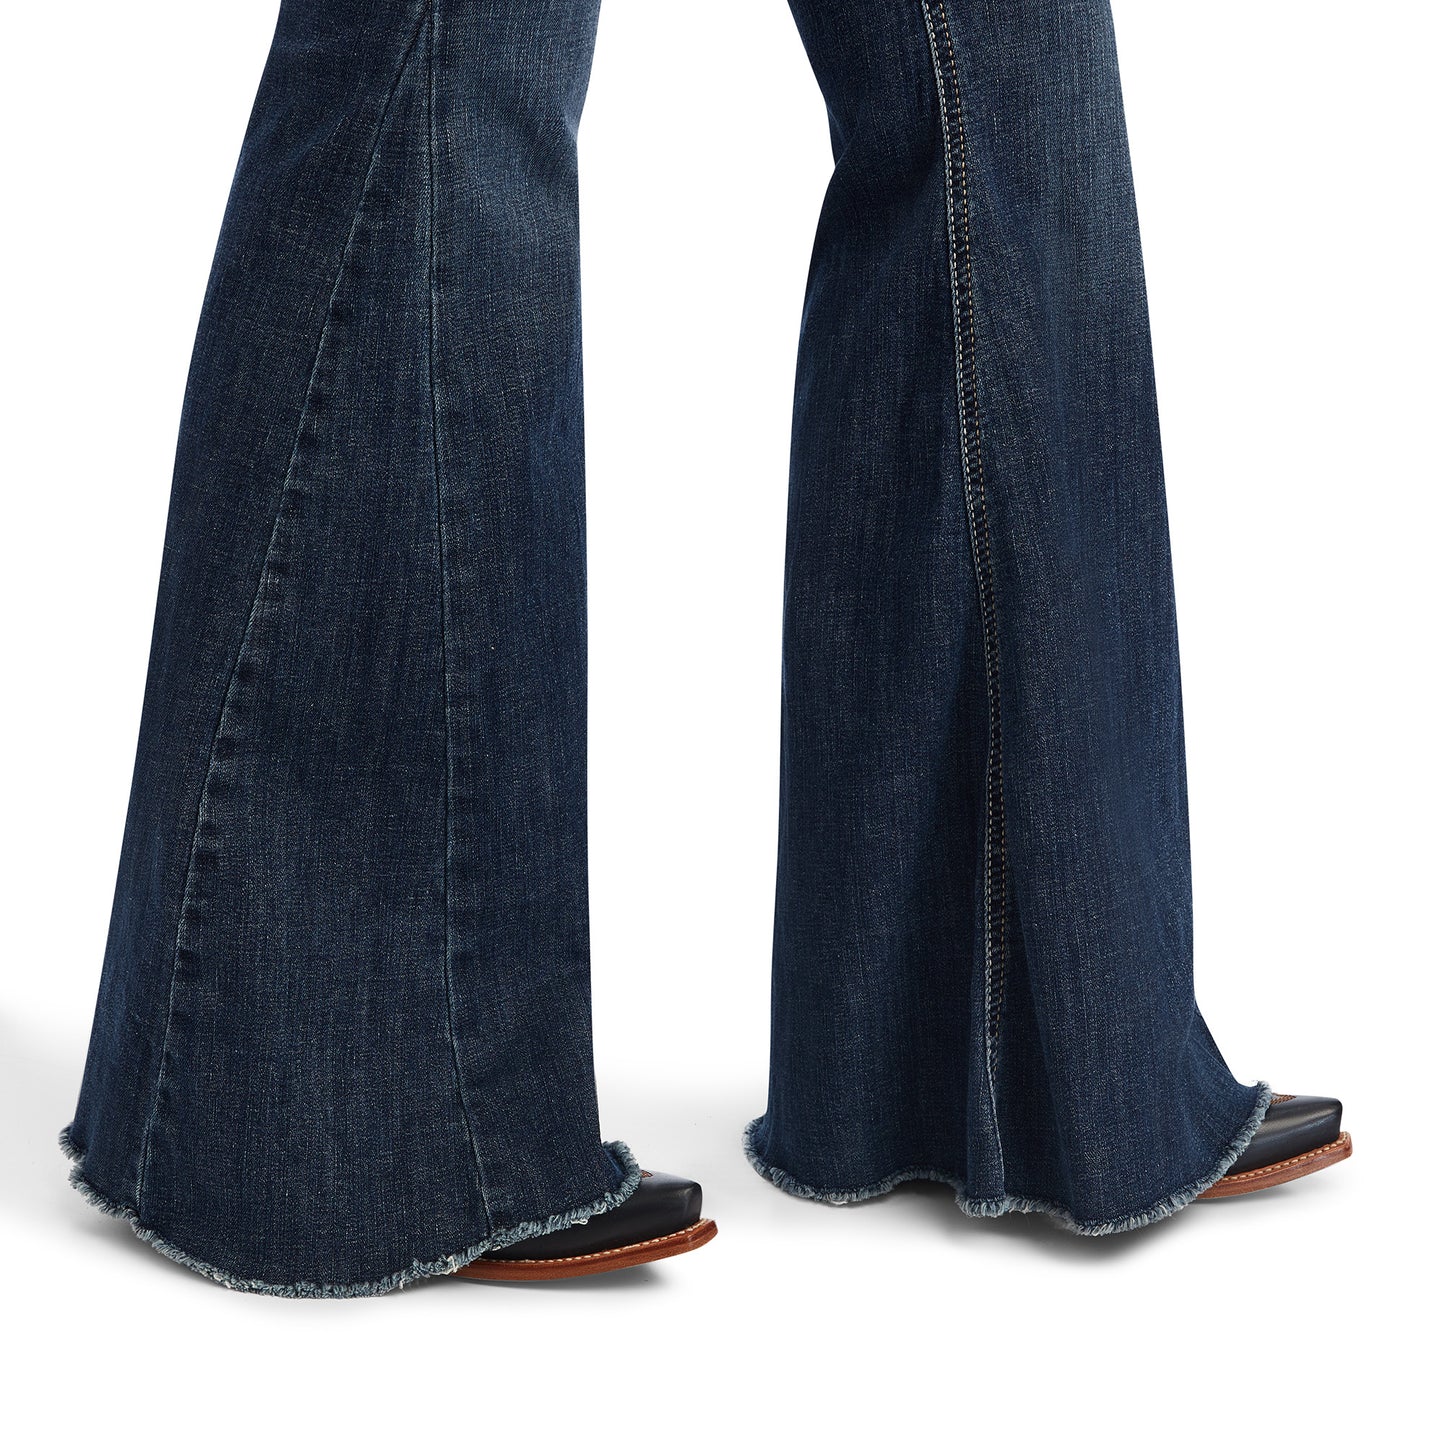 Ariat Women R.E.A.L. High Rise Zinnia Extreme Flare Jean